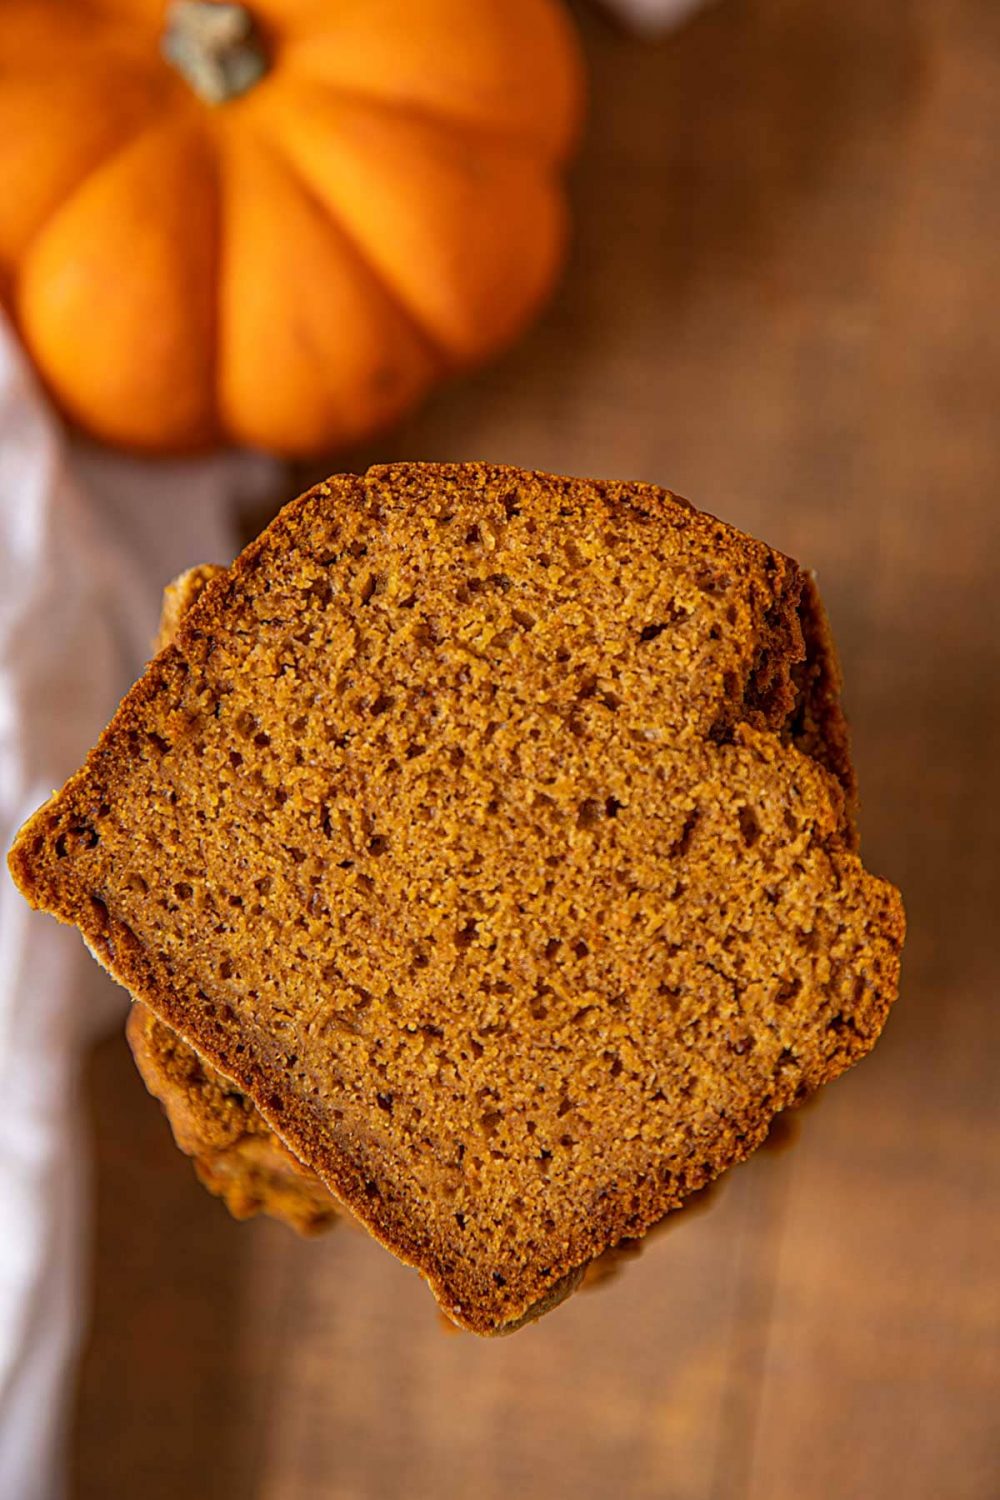 Homemade Pumpkin Bread: Fall's Ultimate Delight